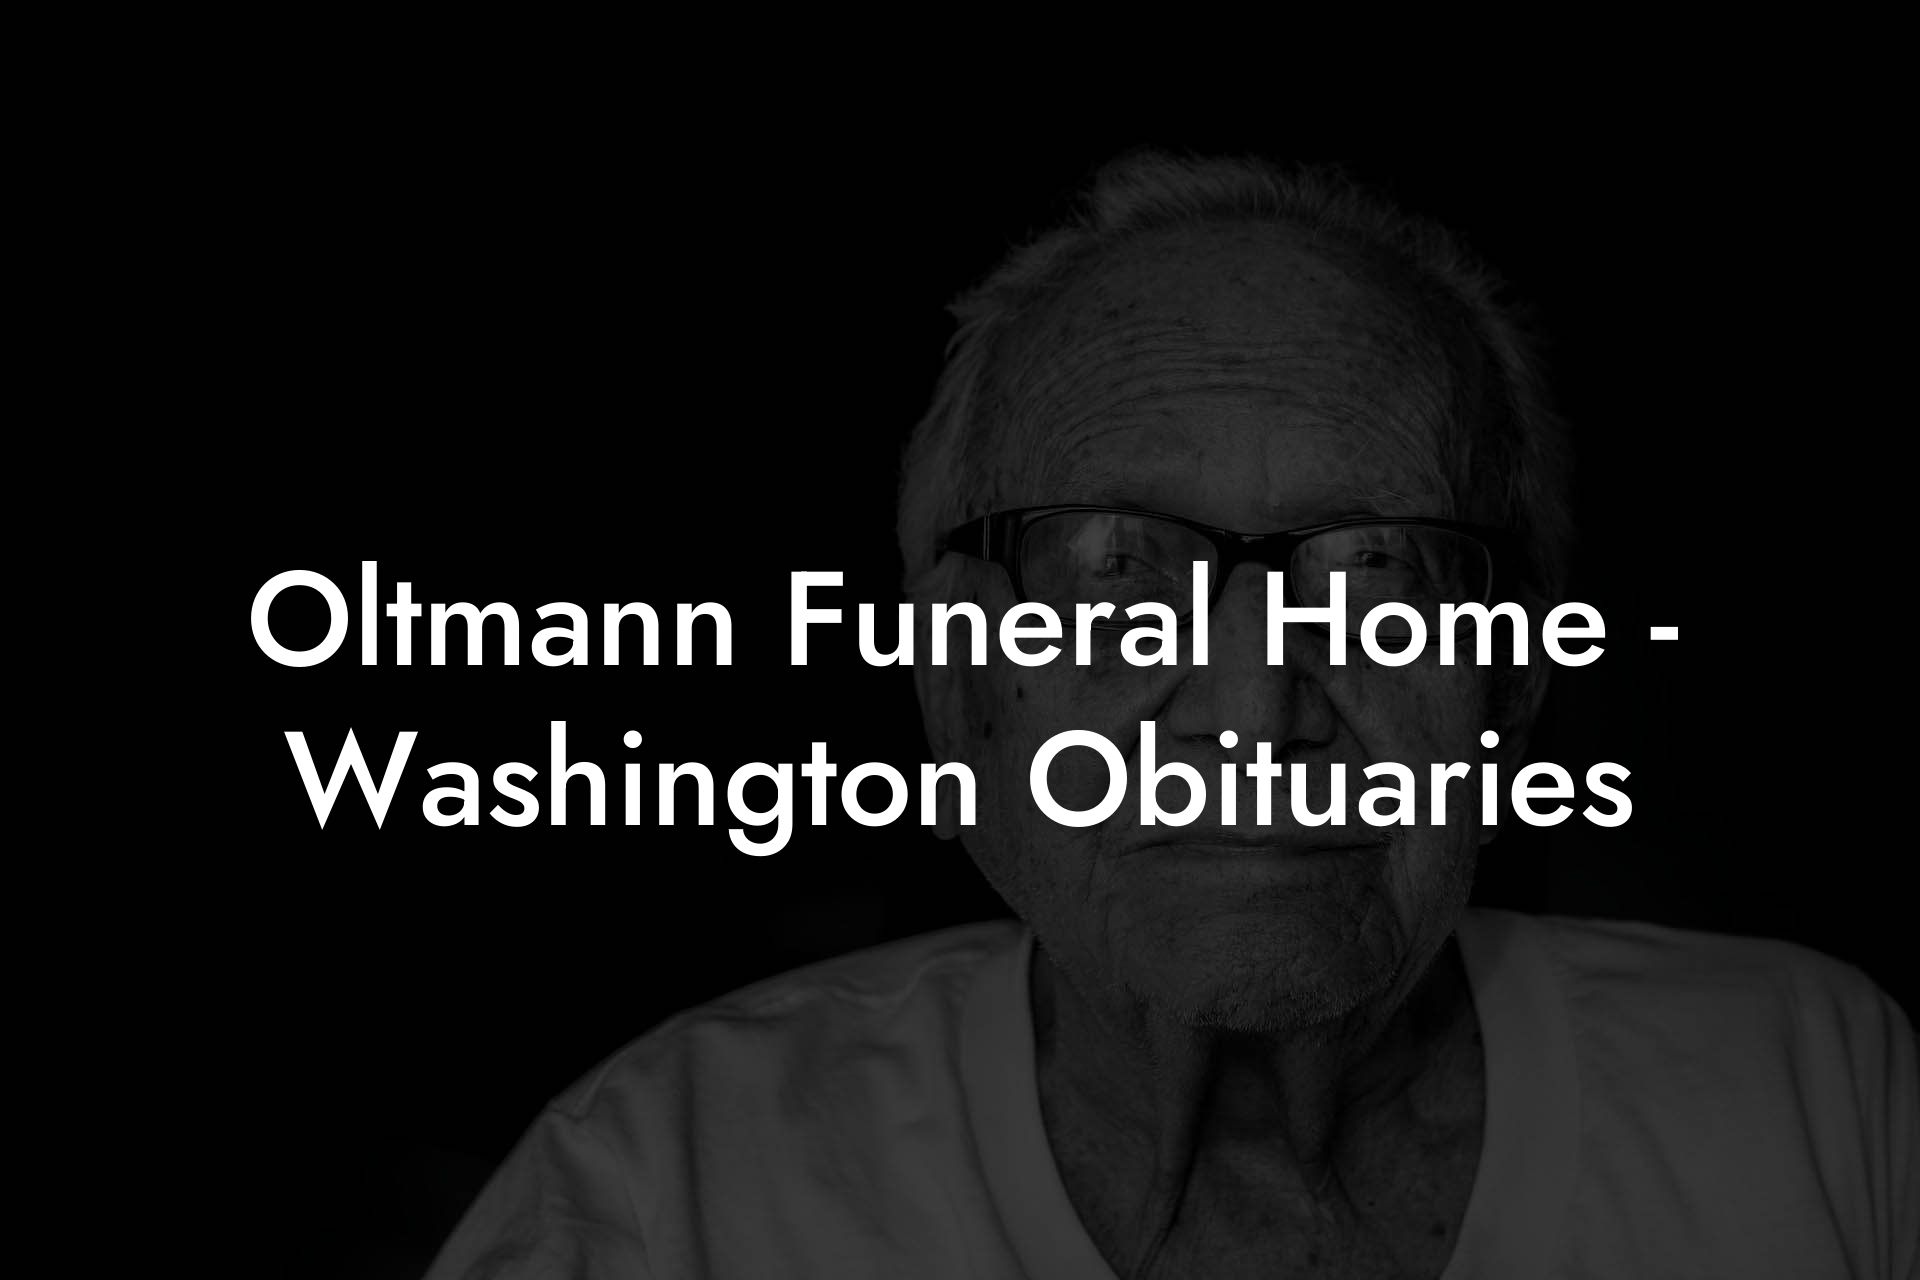 Oltmann Funeral Home - Washington Obituaries